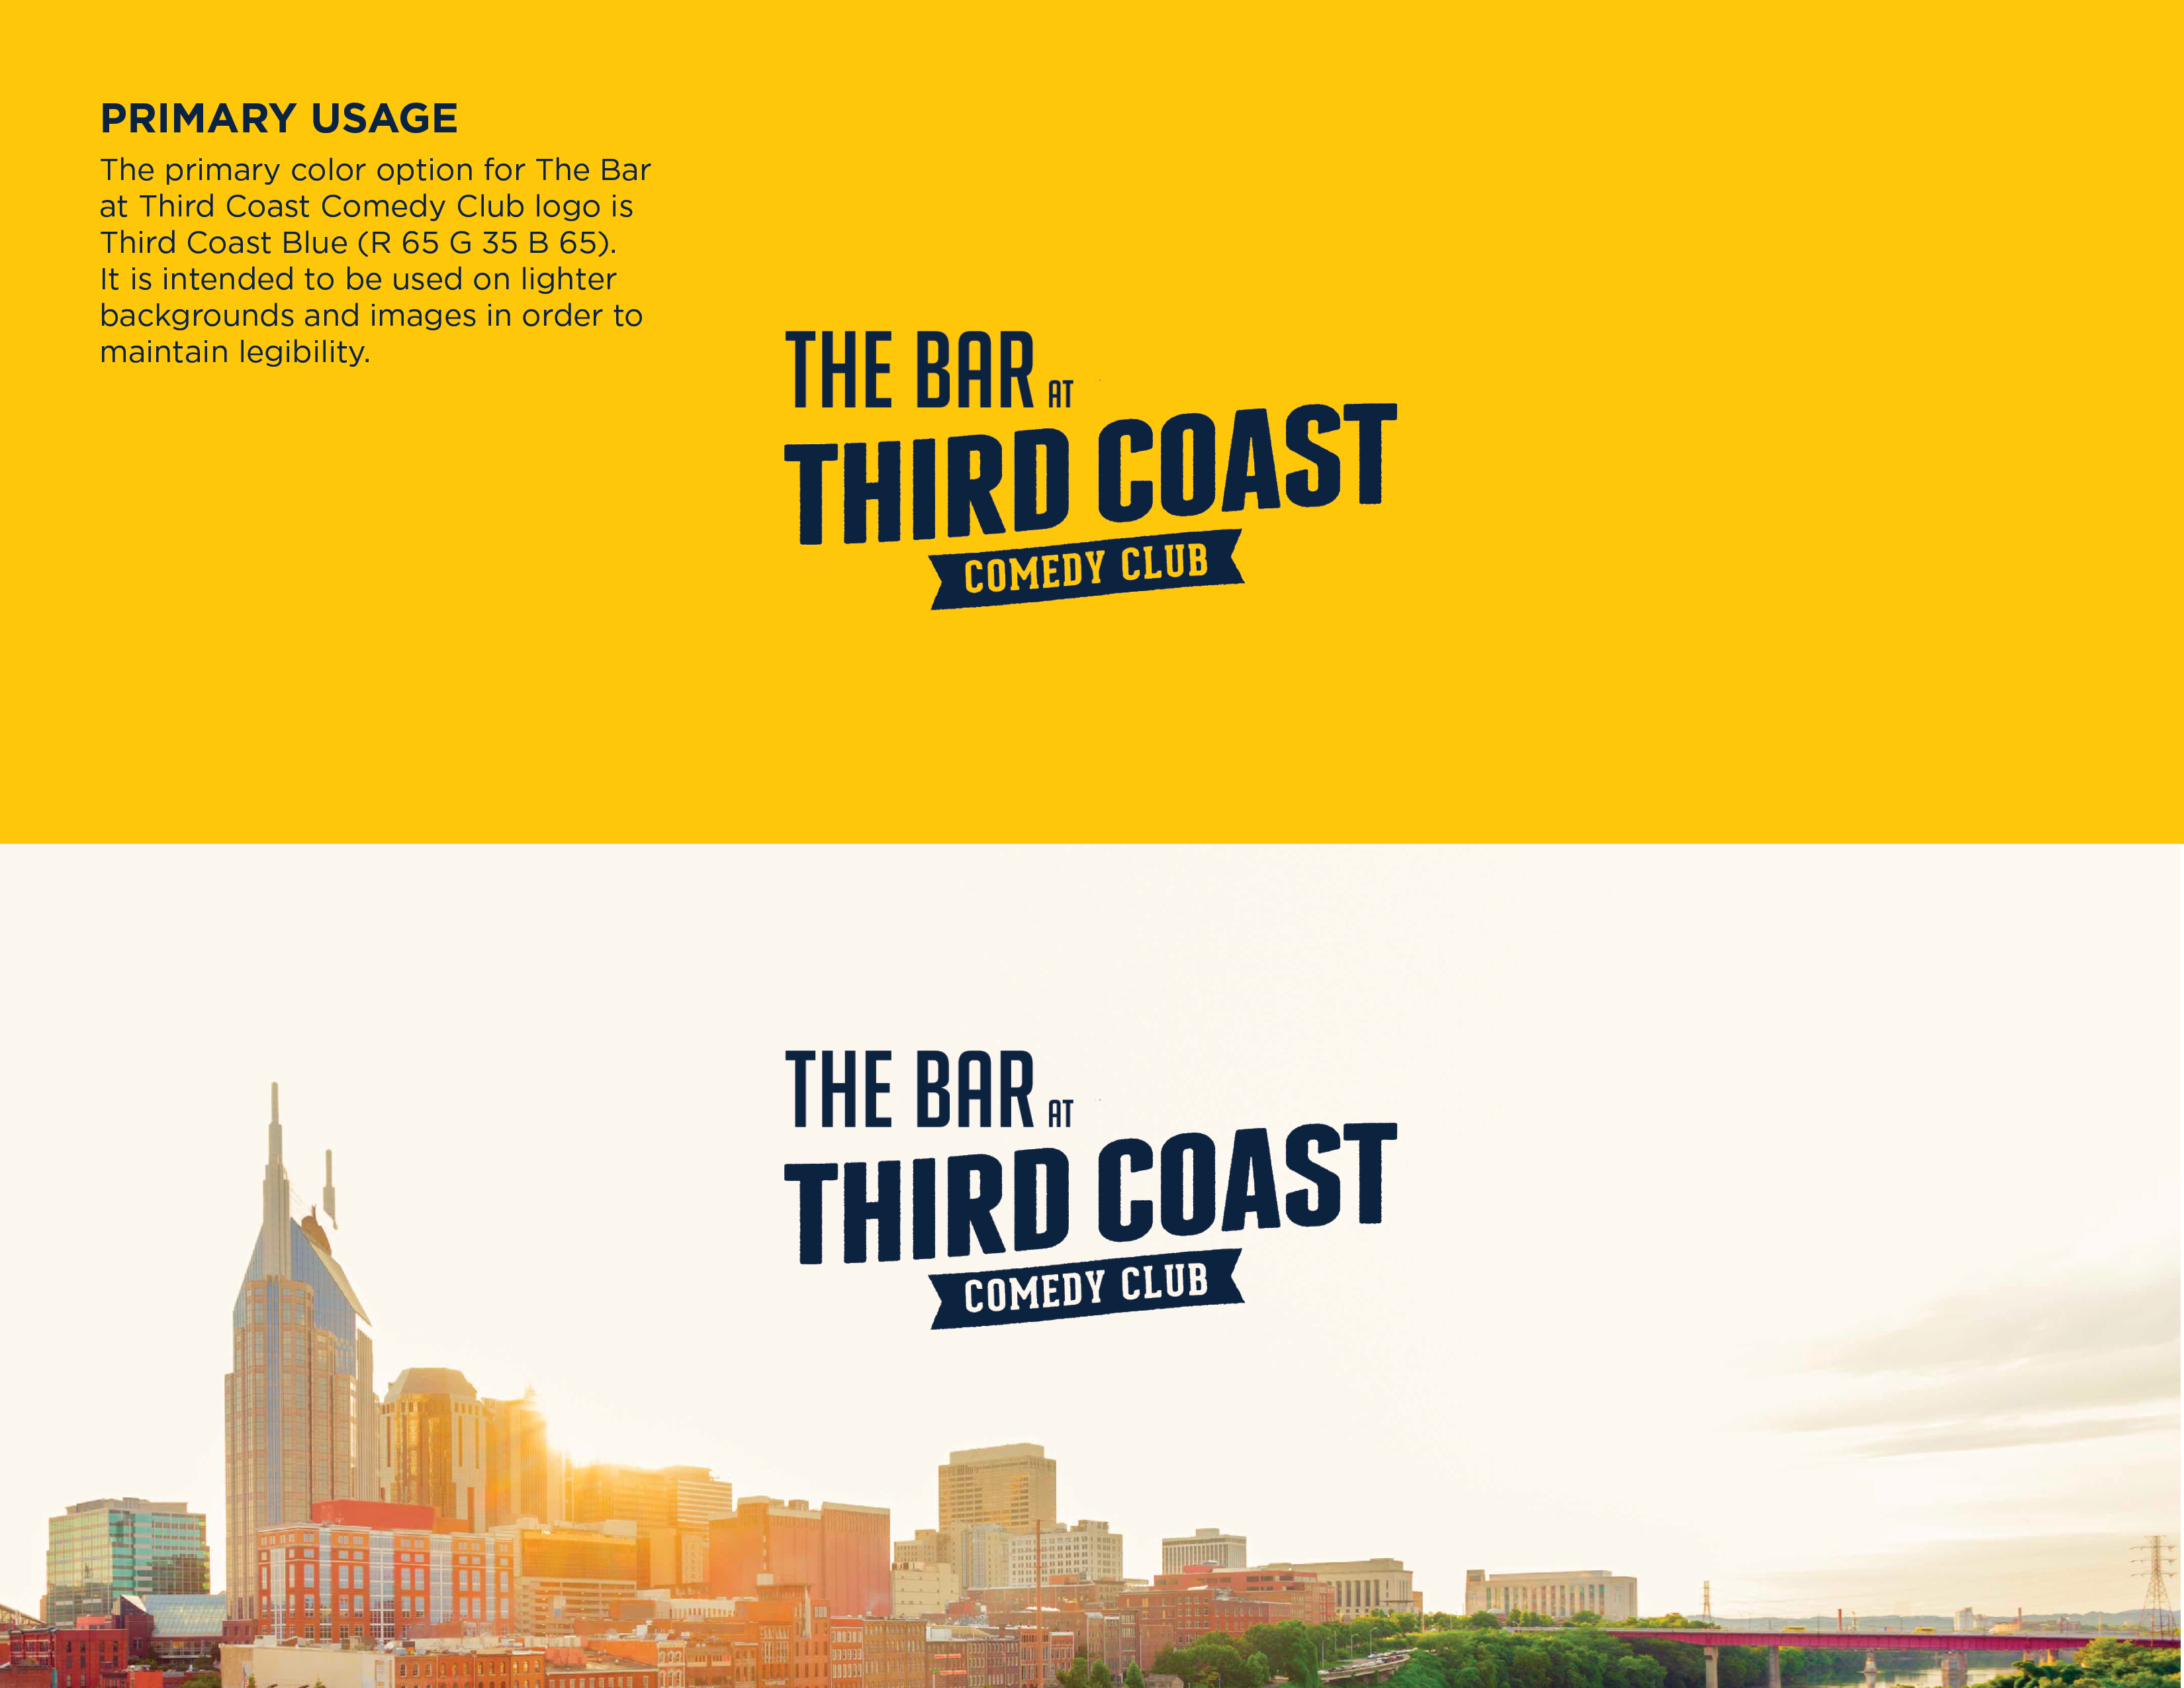 Third Coast Brand Guidelines 20239